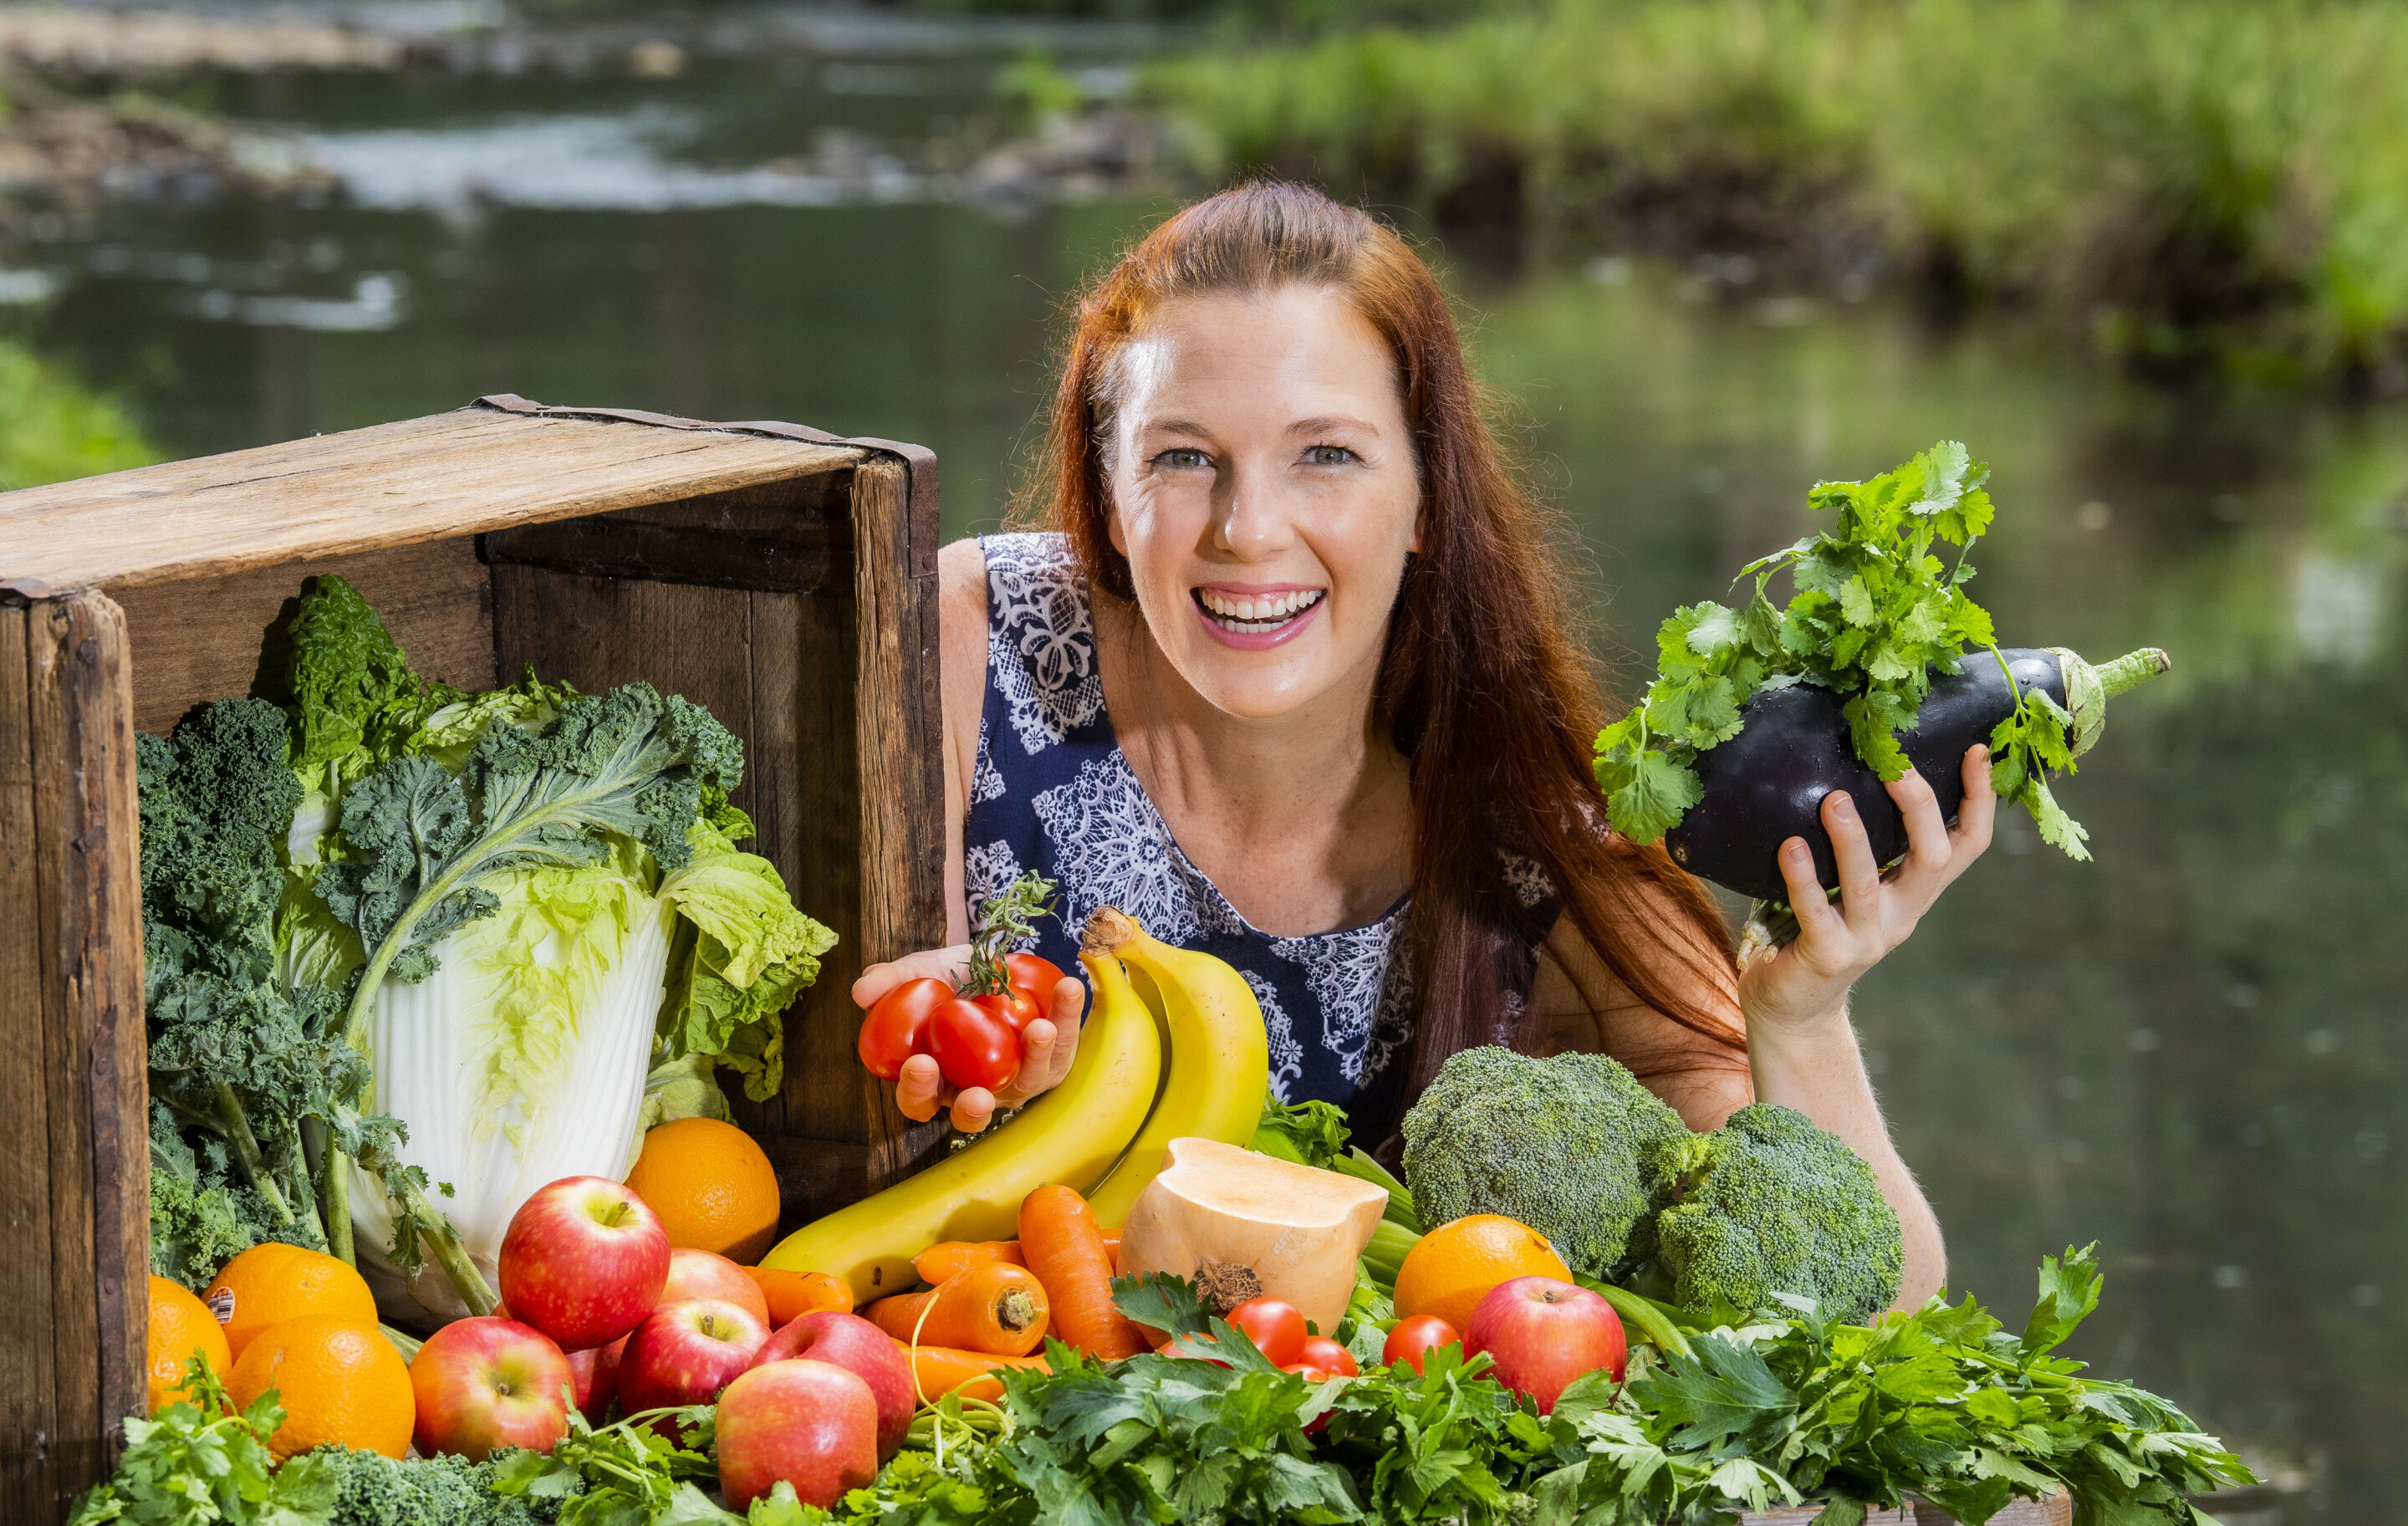 Vegetarian diet quality influences mental health